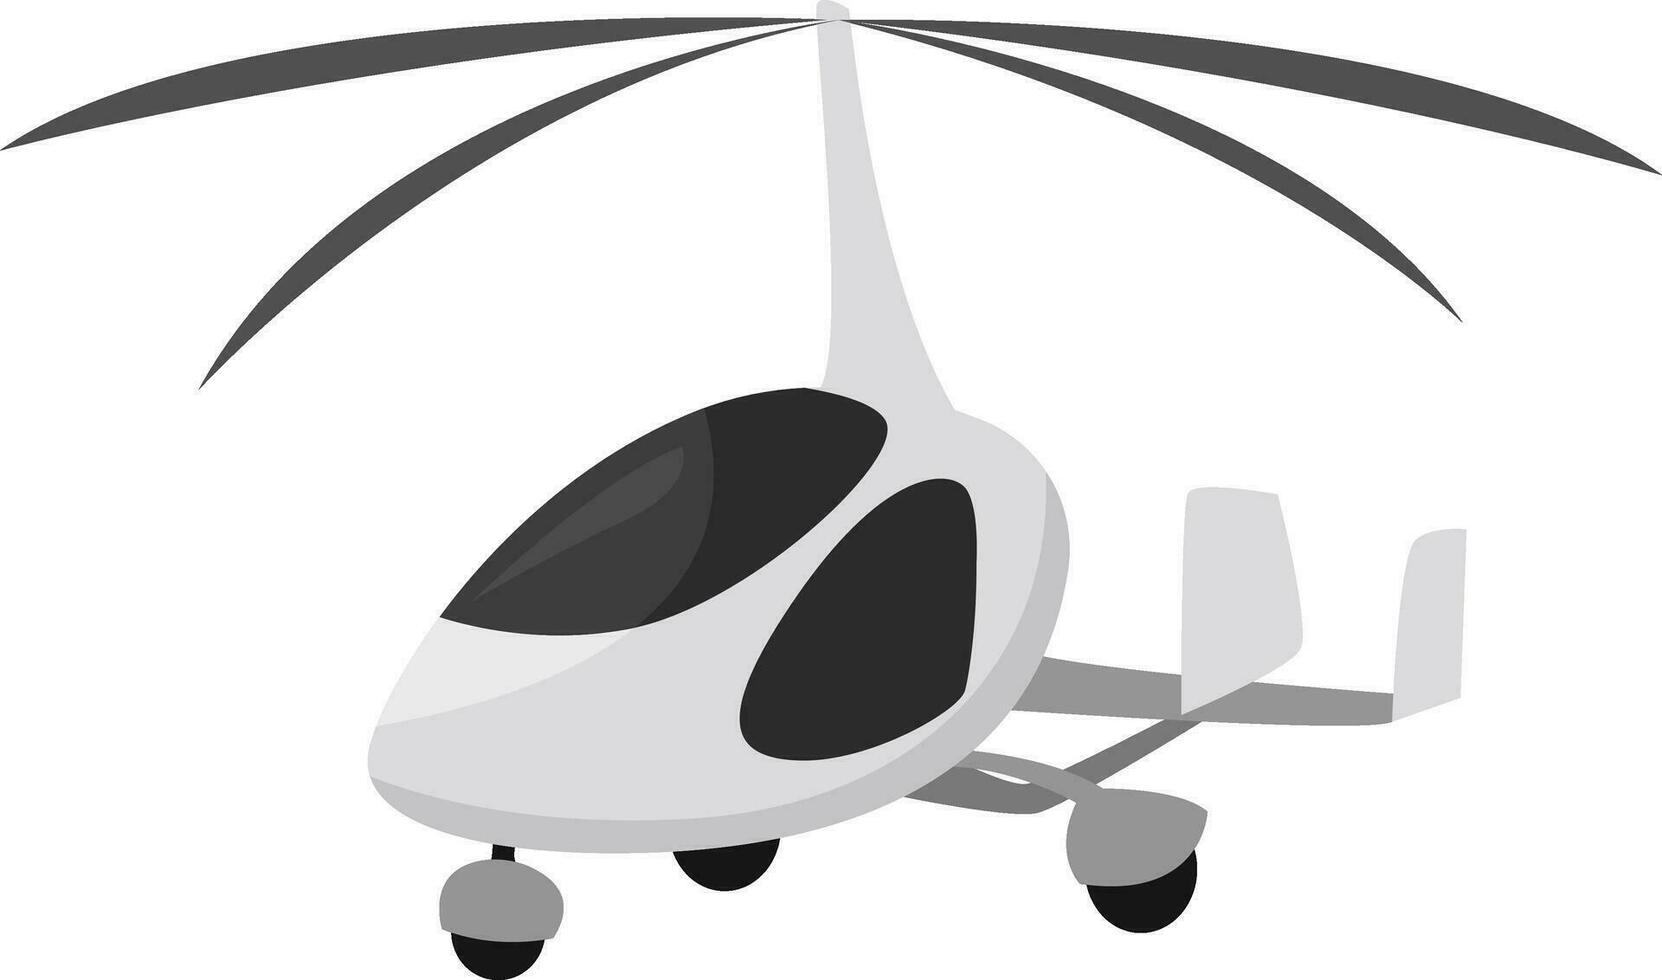 White helicopter, illustration, vector on white background